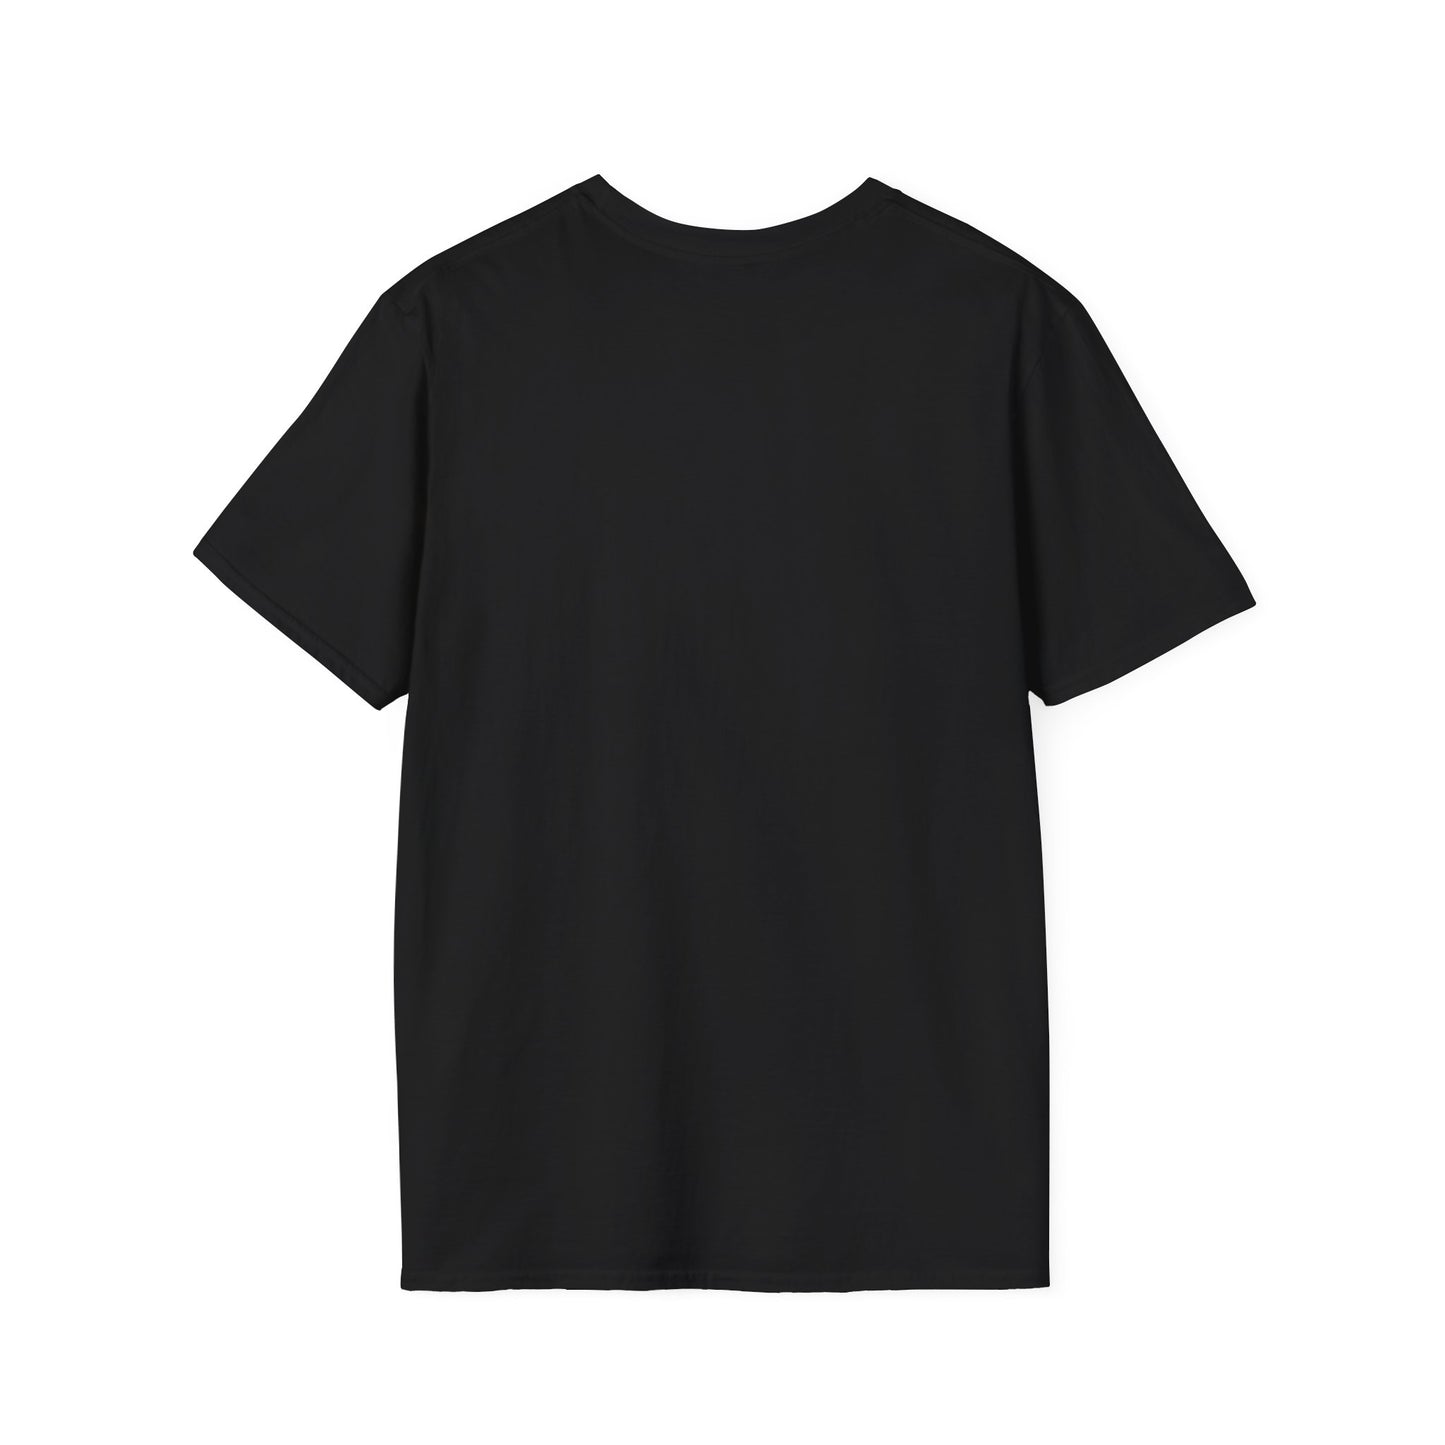 Team Mordecai  Unisex Softstyle T-Shirt